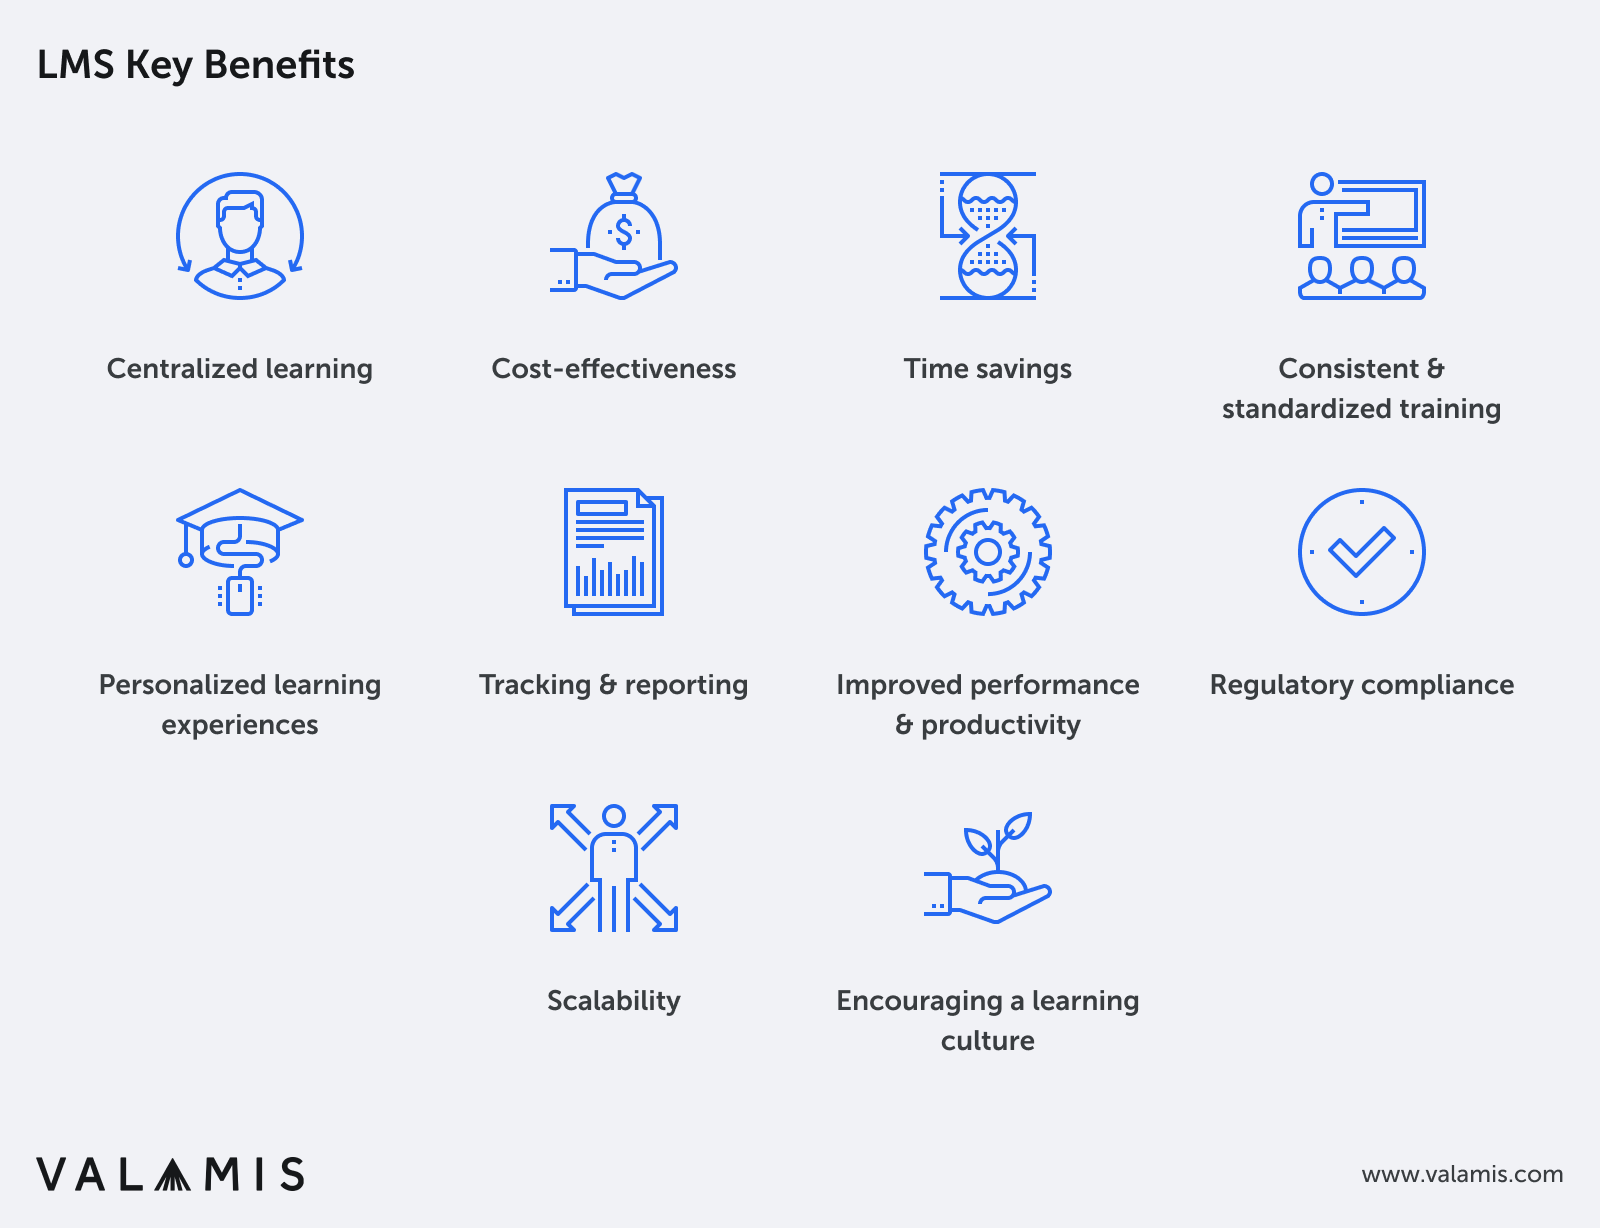 The list of key LMS benefits